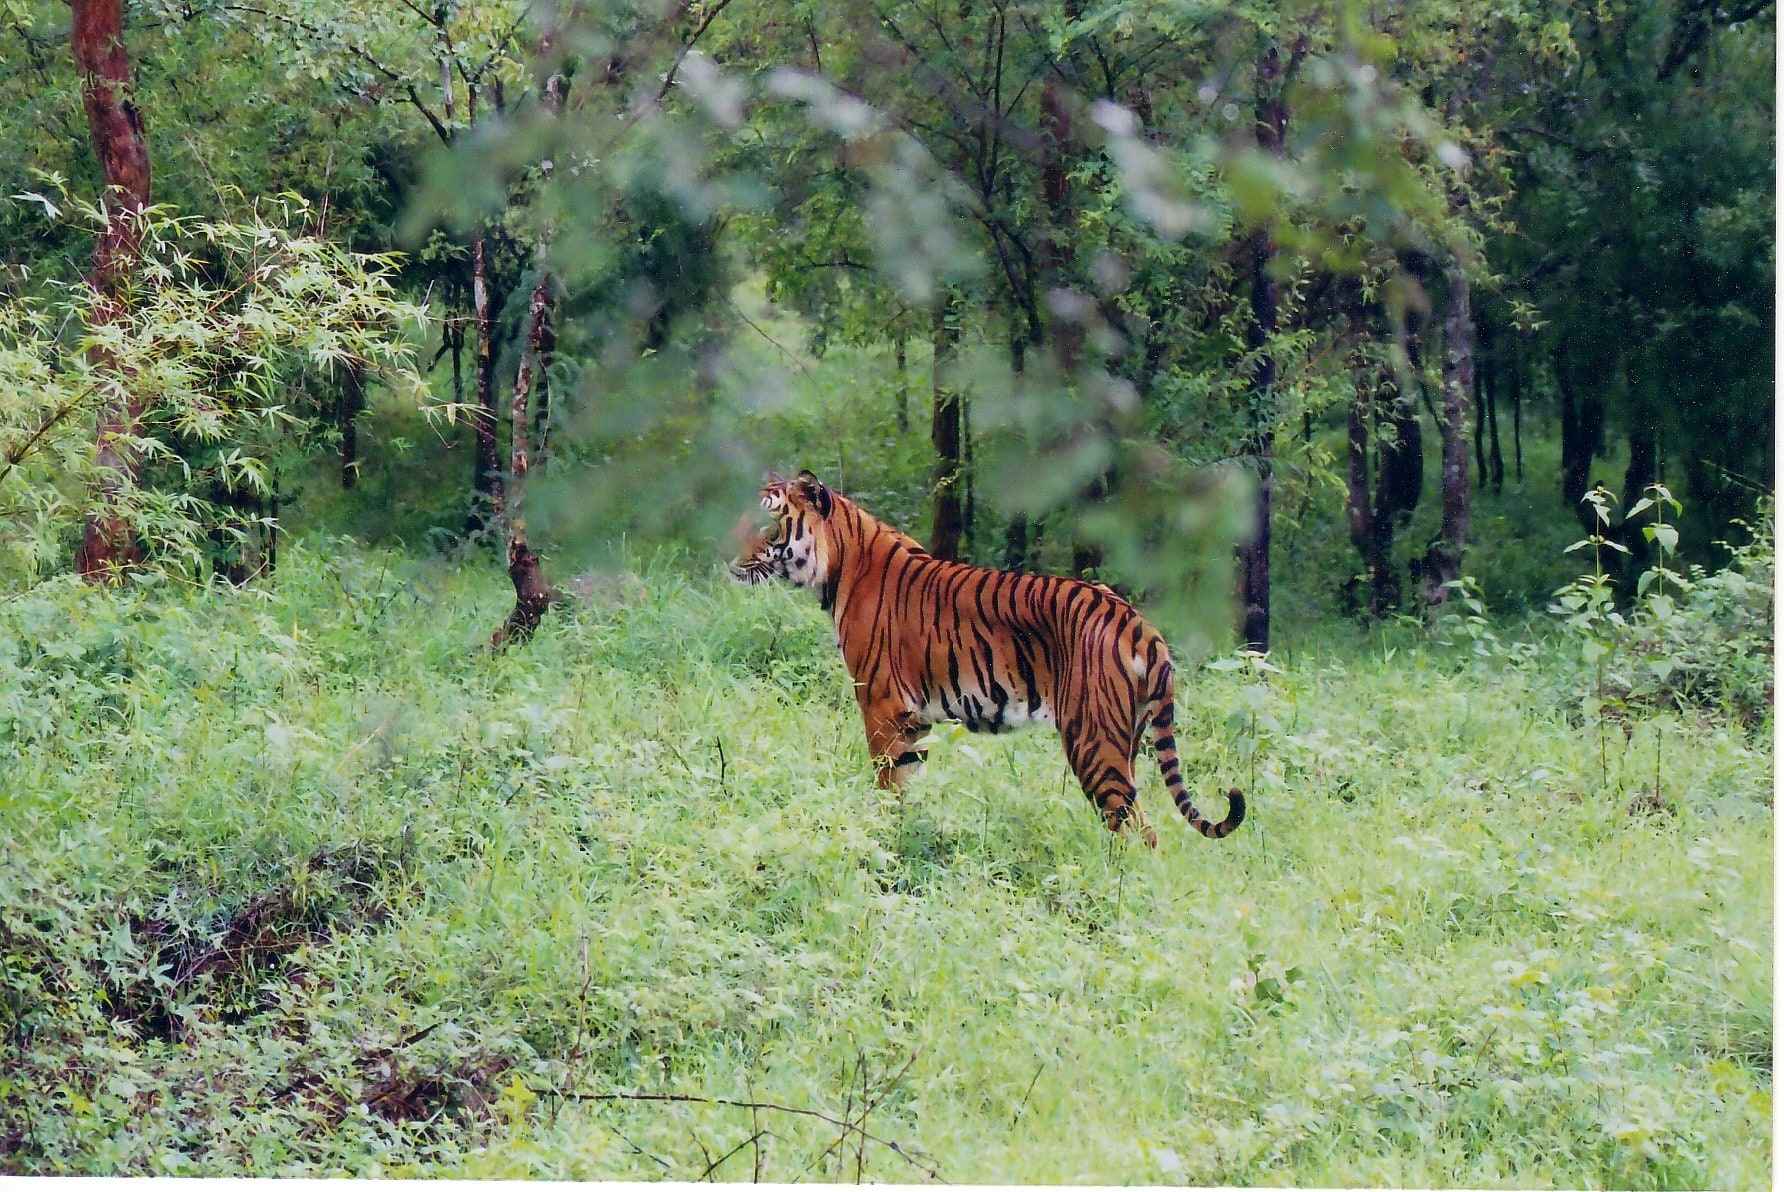 Santuario de vida silvestre de Bhadra, India